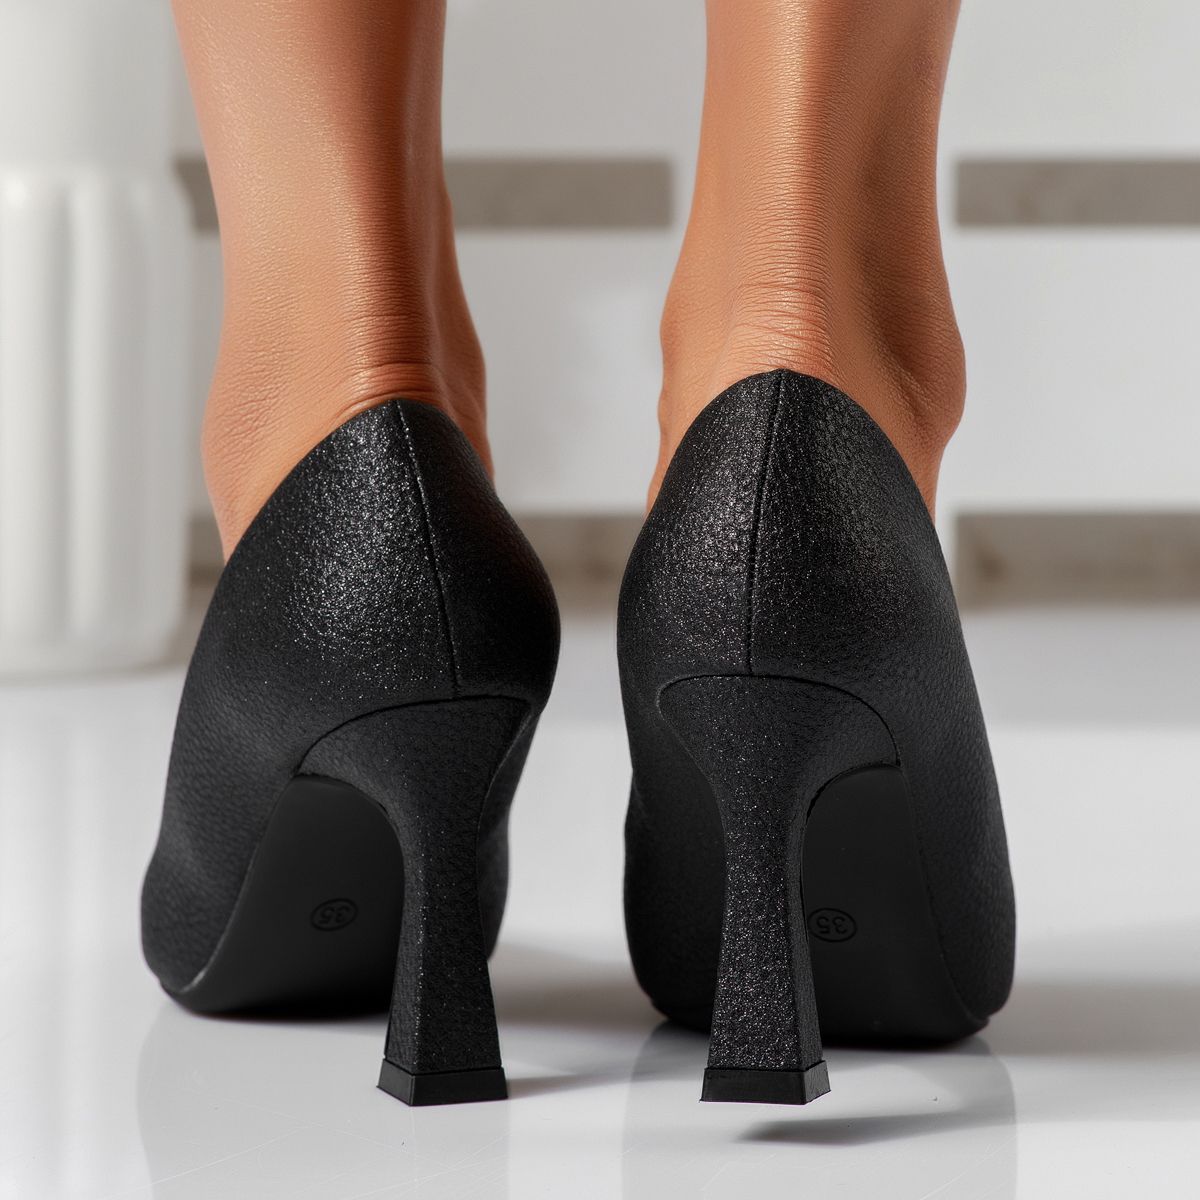 Pantofi Dama cu Toc Siena Negri #16655